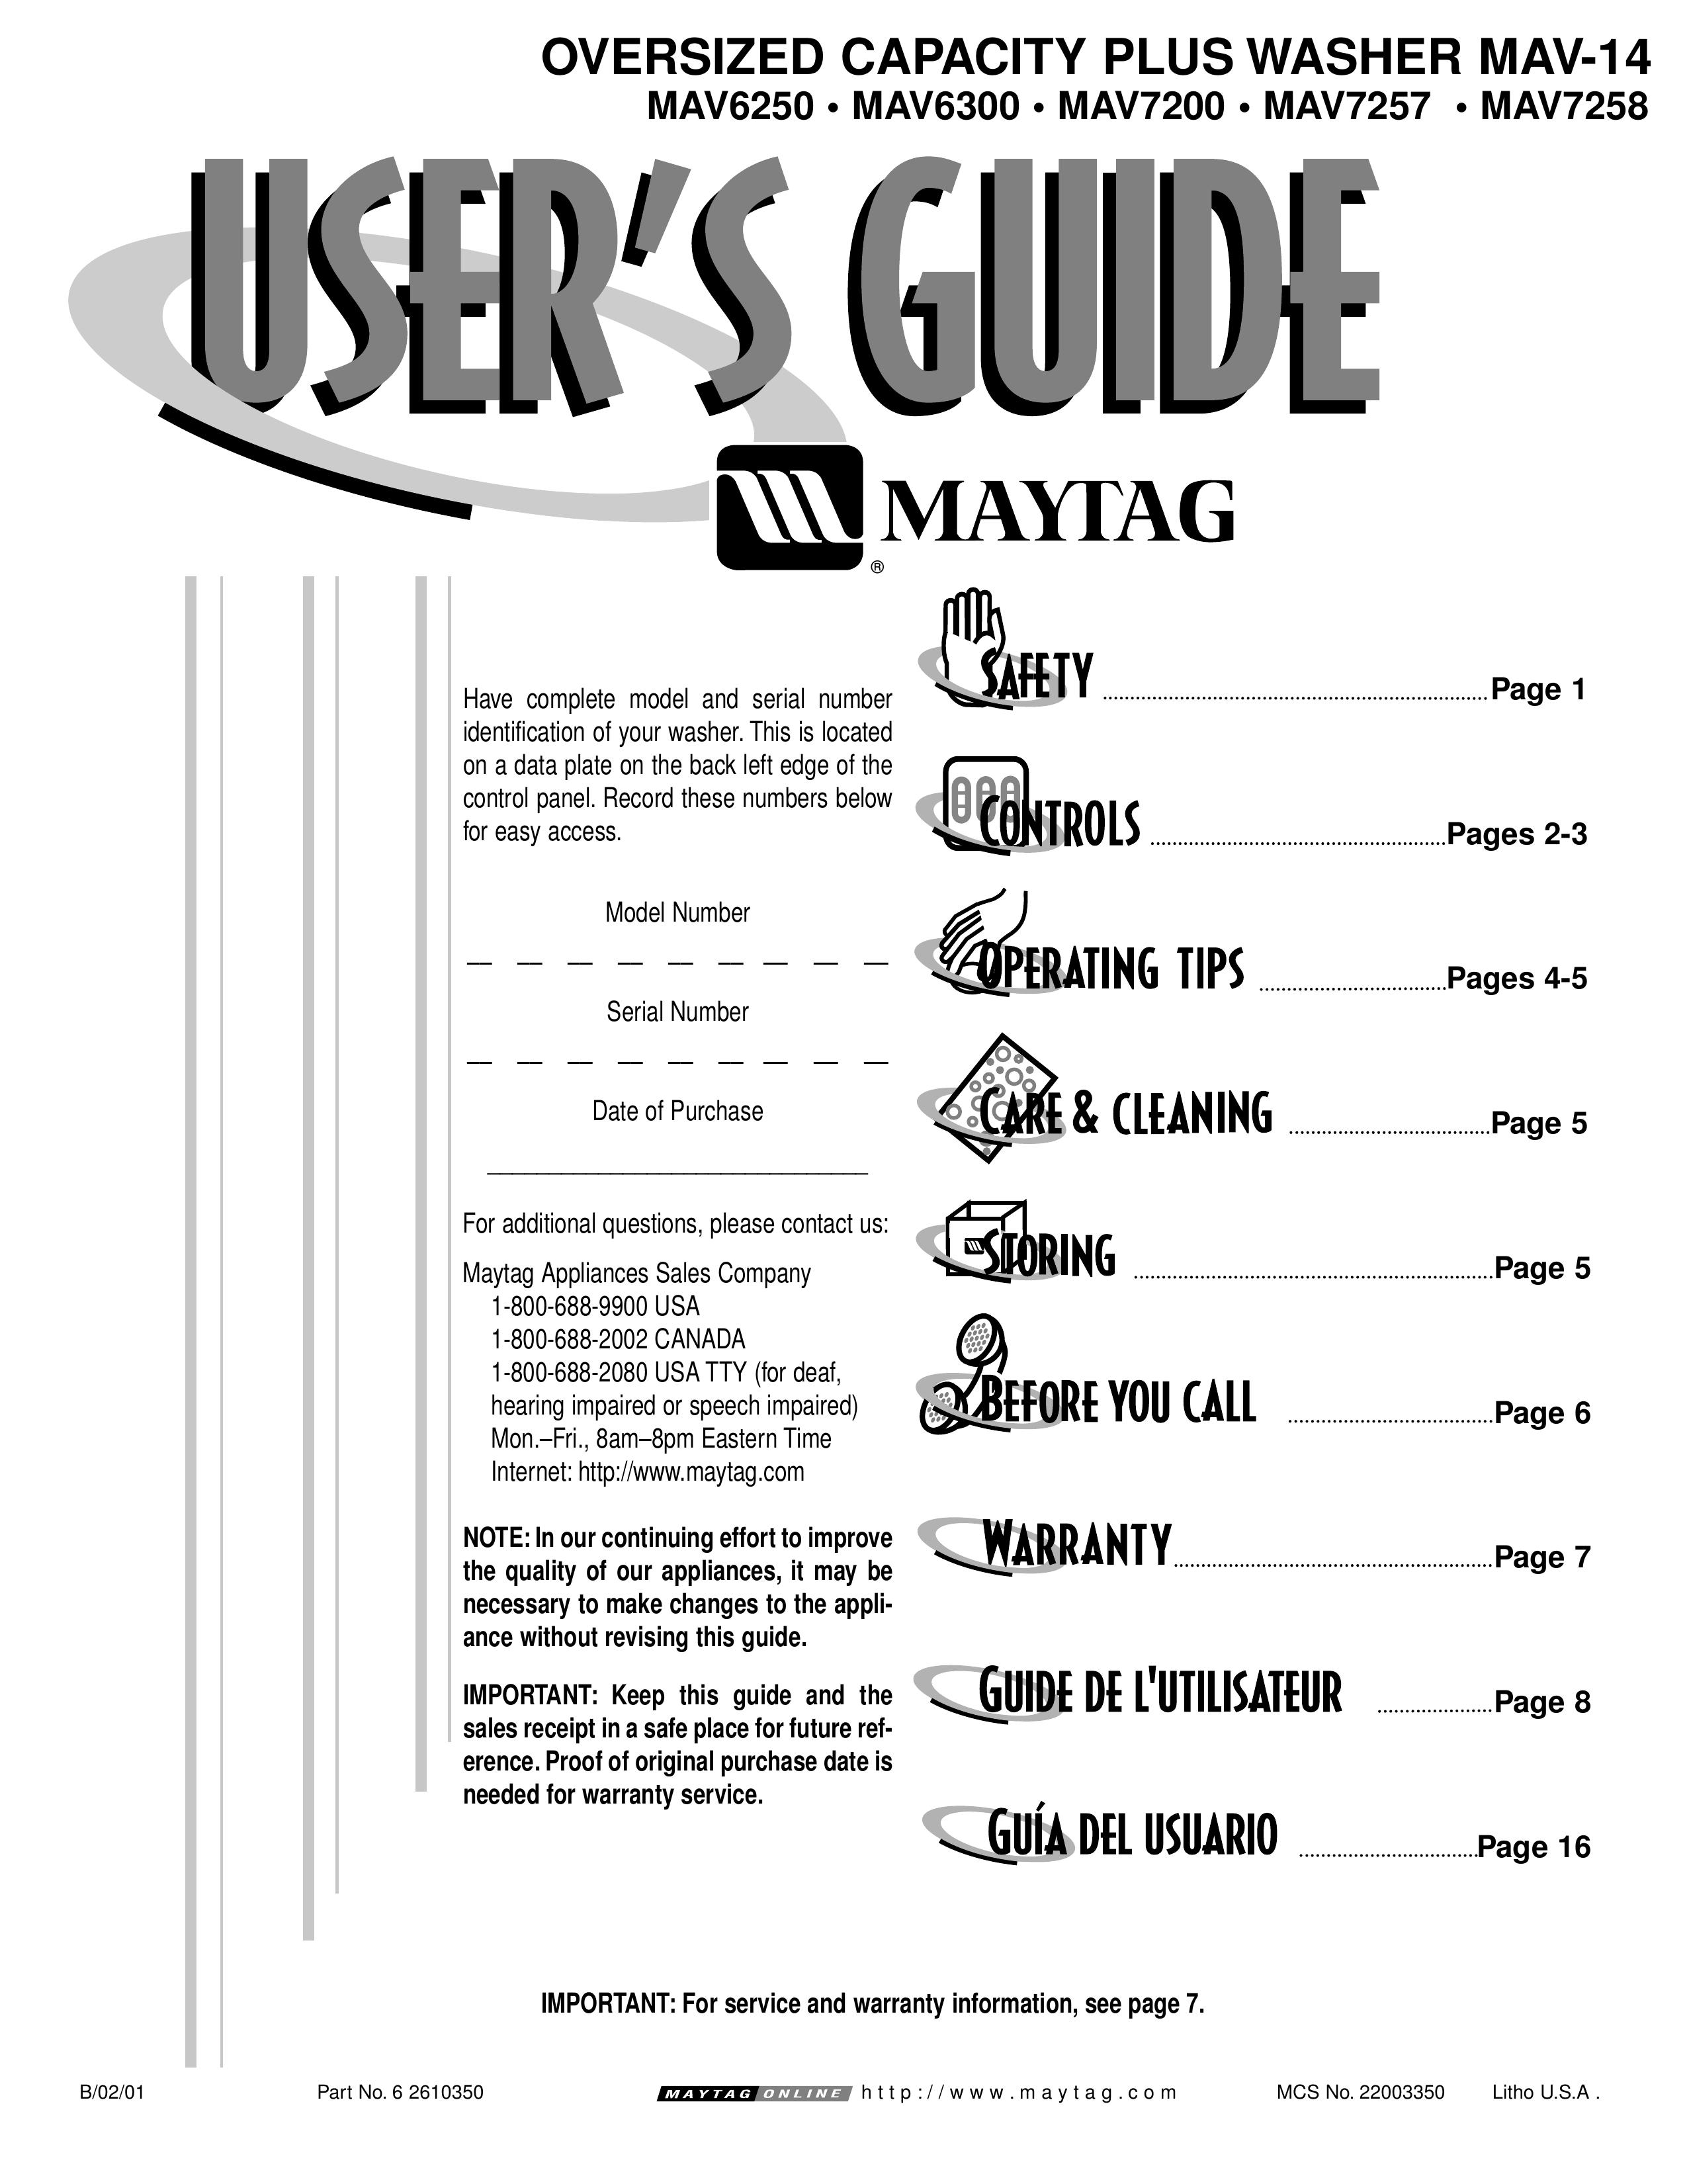 Maytag MAV6300 Washer/Dryer User Manual